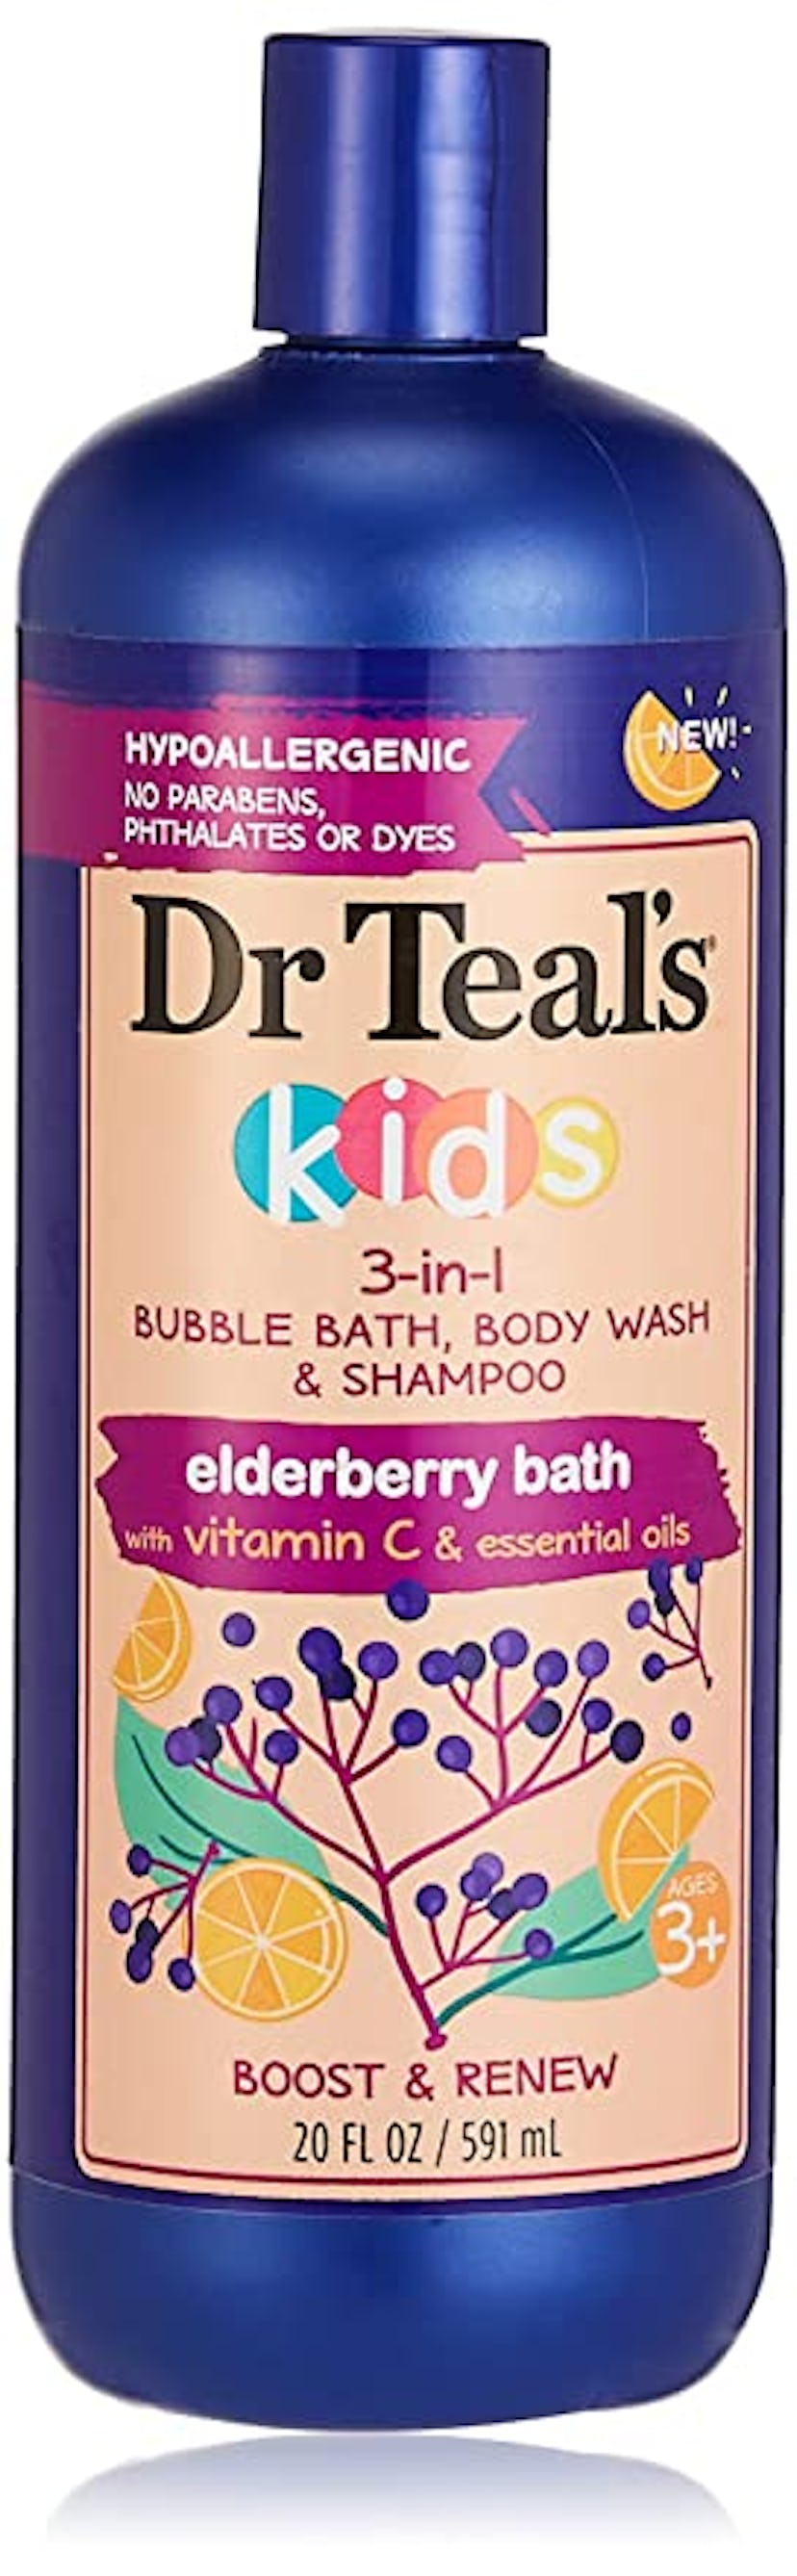 Dr Teal's Kids 3-in-1 Elderberry Bubble Bath, Body Wash & Shampoo (20 Oz.)